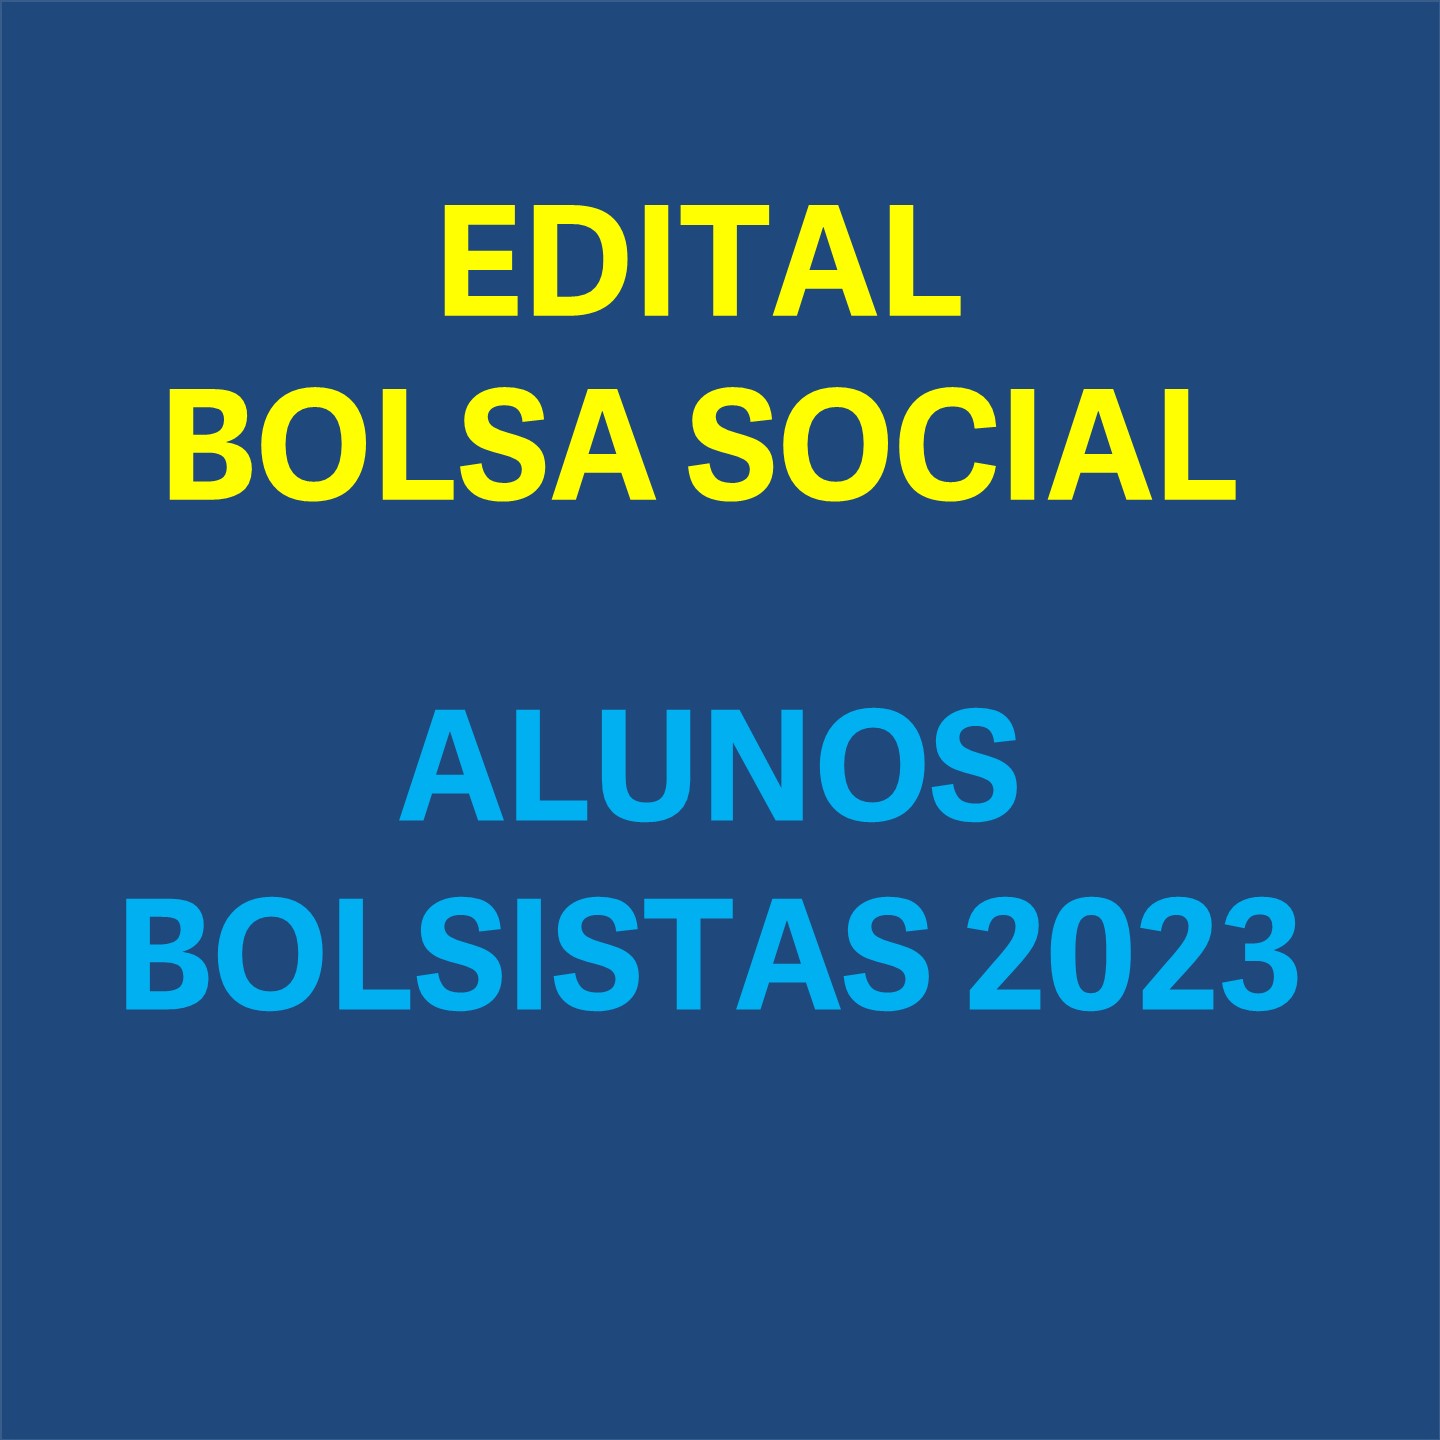 Edital Bolsa Social – Alunos Bolsistas 2023